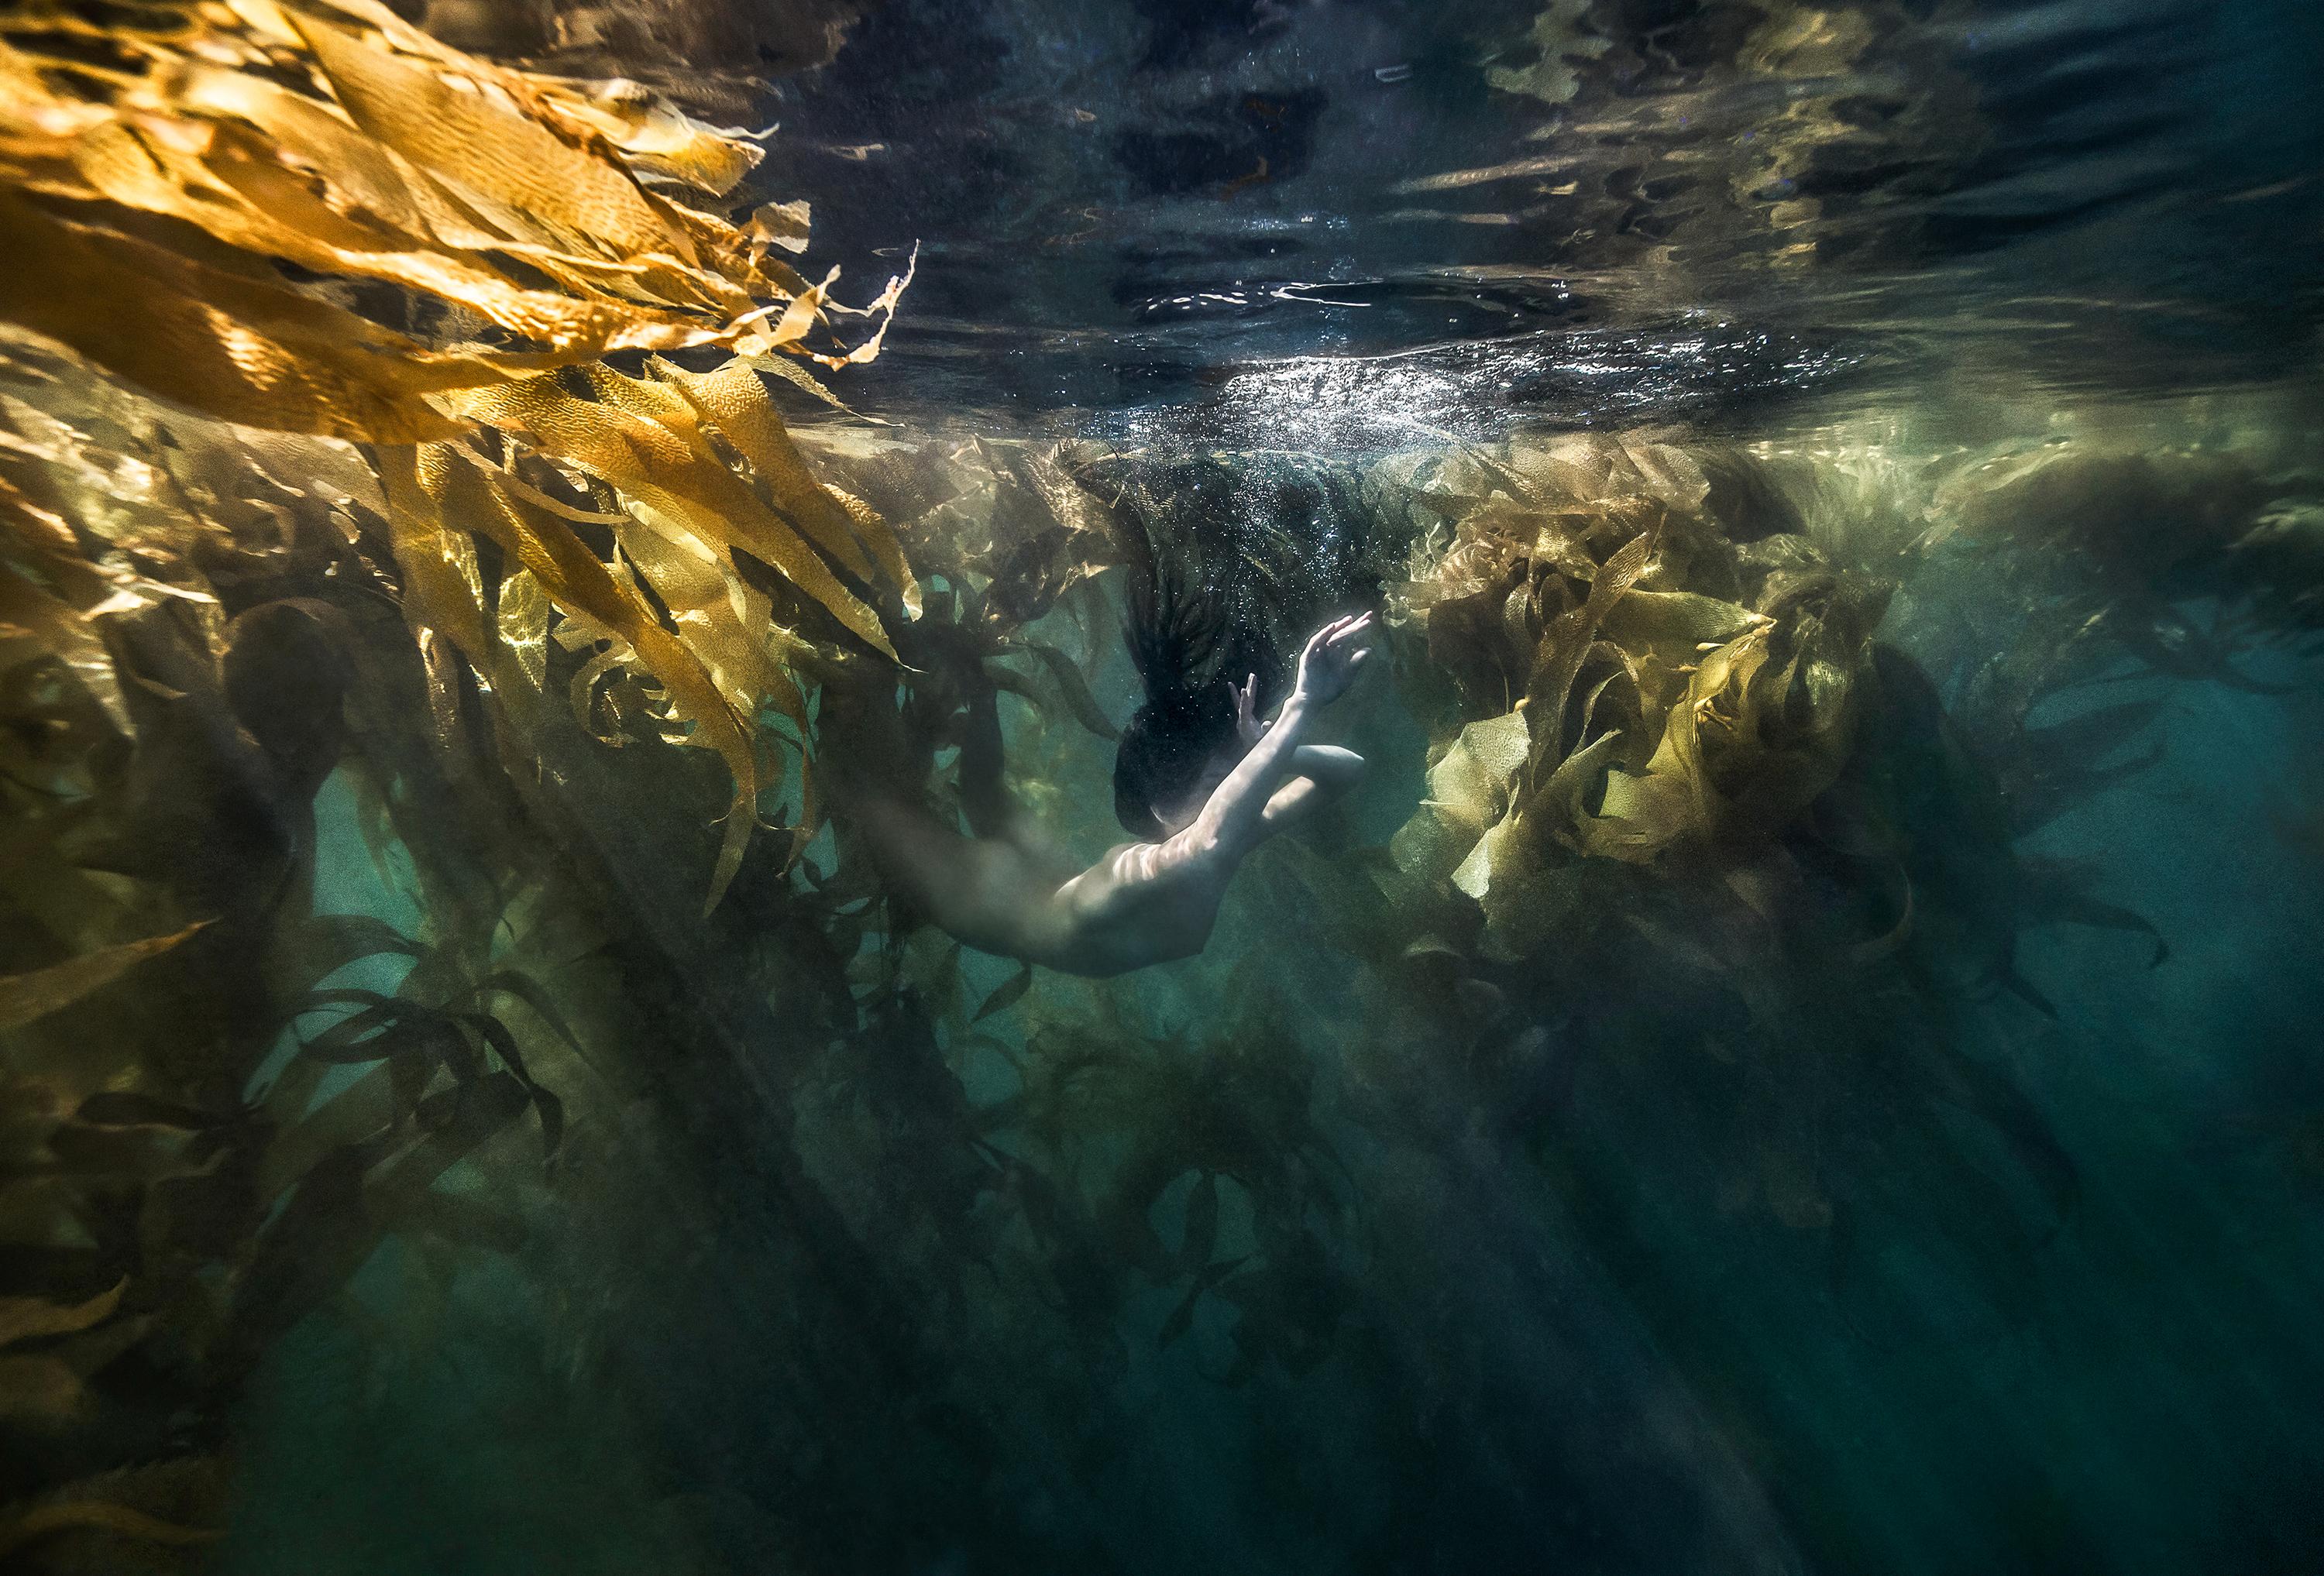 Alex Sher Figurative Photograph - Jungle Mermaid - underwater ocean nude photograph - archival pigment 16x24"